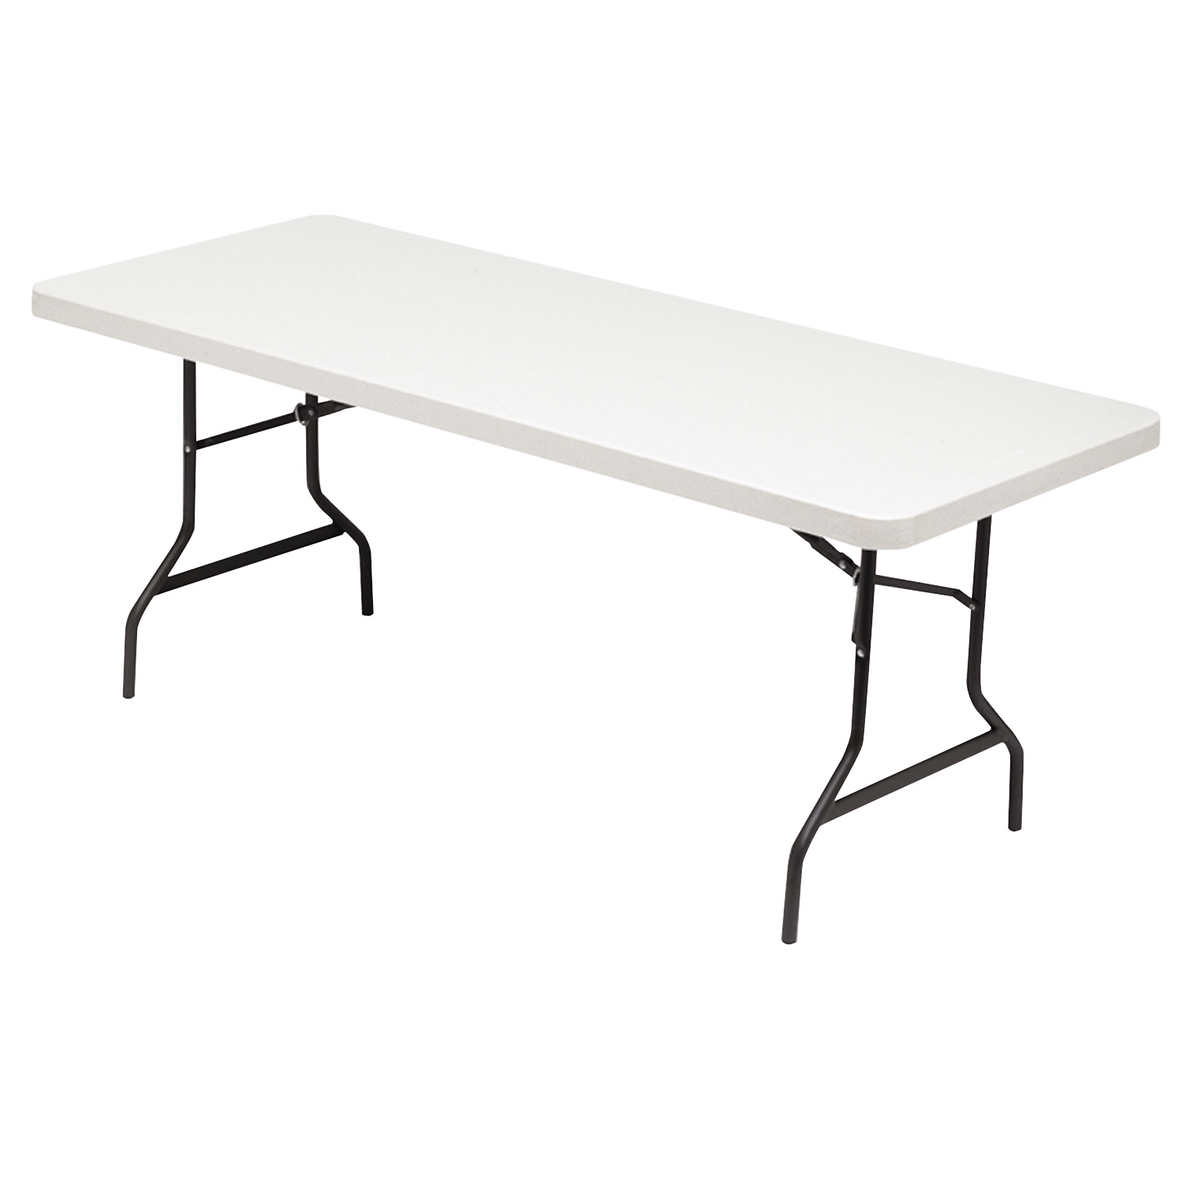 Alera Folding Banquet Table 72 X 29, 72 Inch Round Folding Table Costco